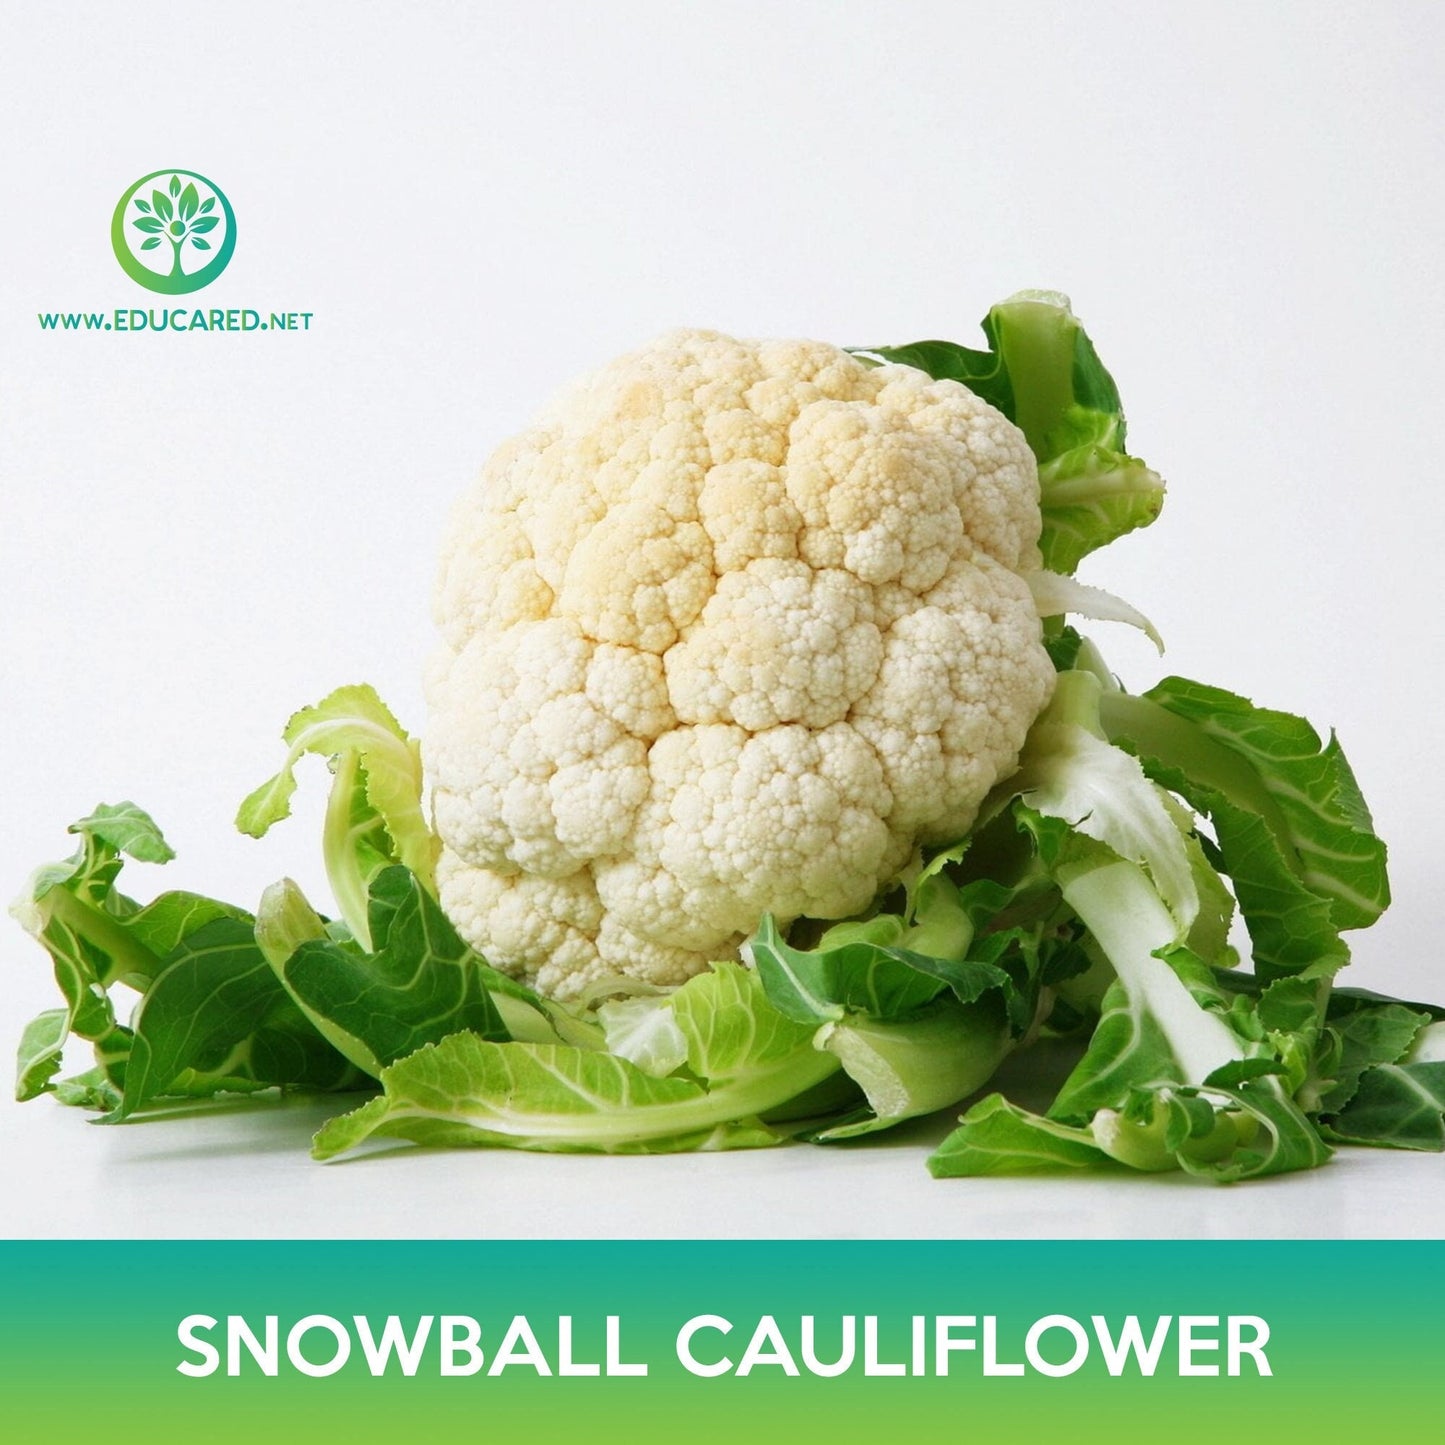 Snowball Cauliflower Seeds